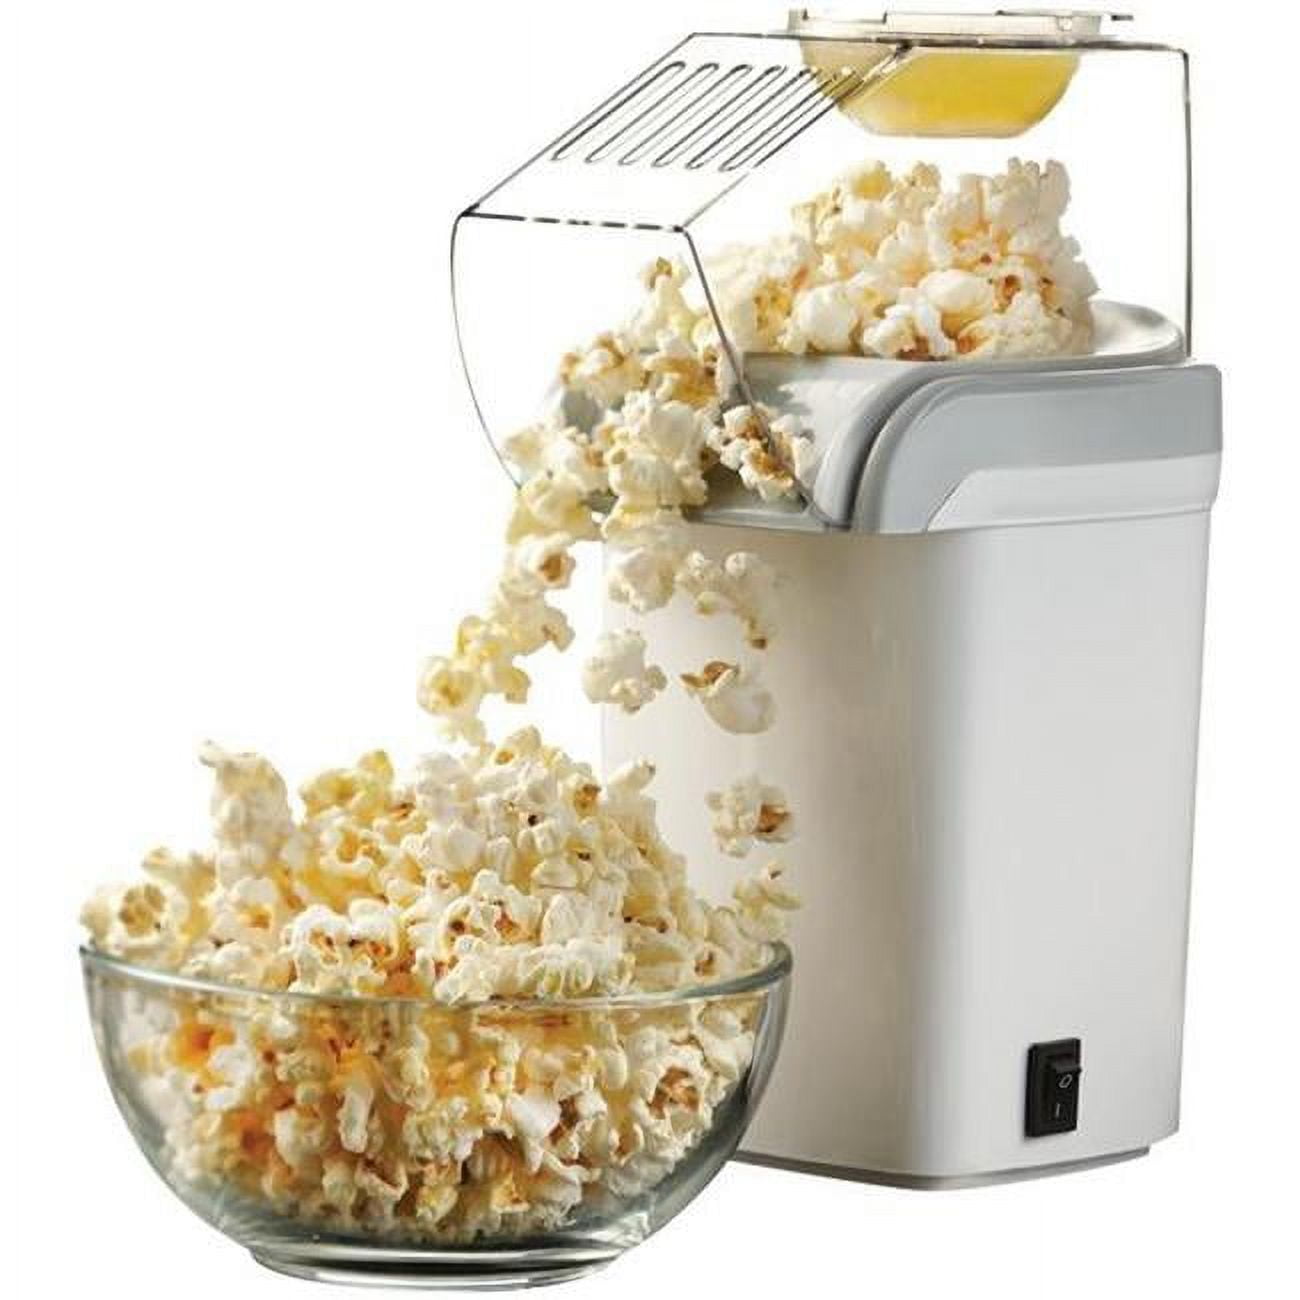 VAlinks Hot Air Popcorn Machine, Popcorn Maker, 800W India